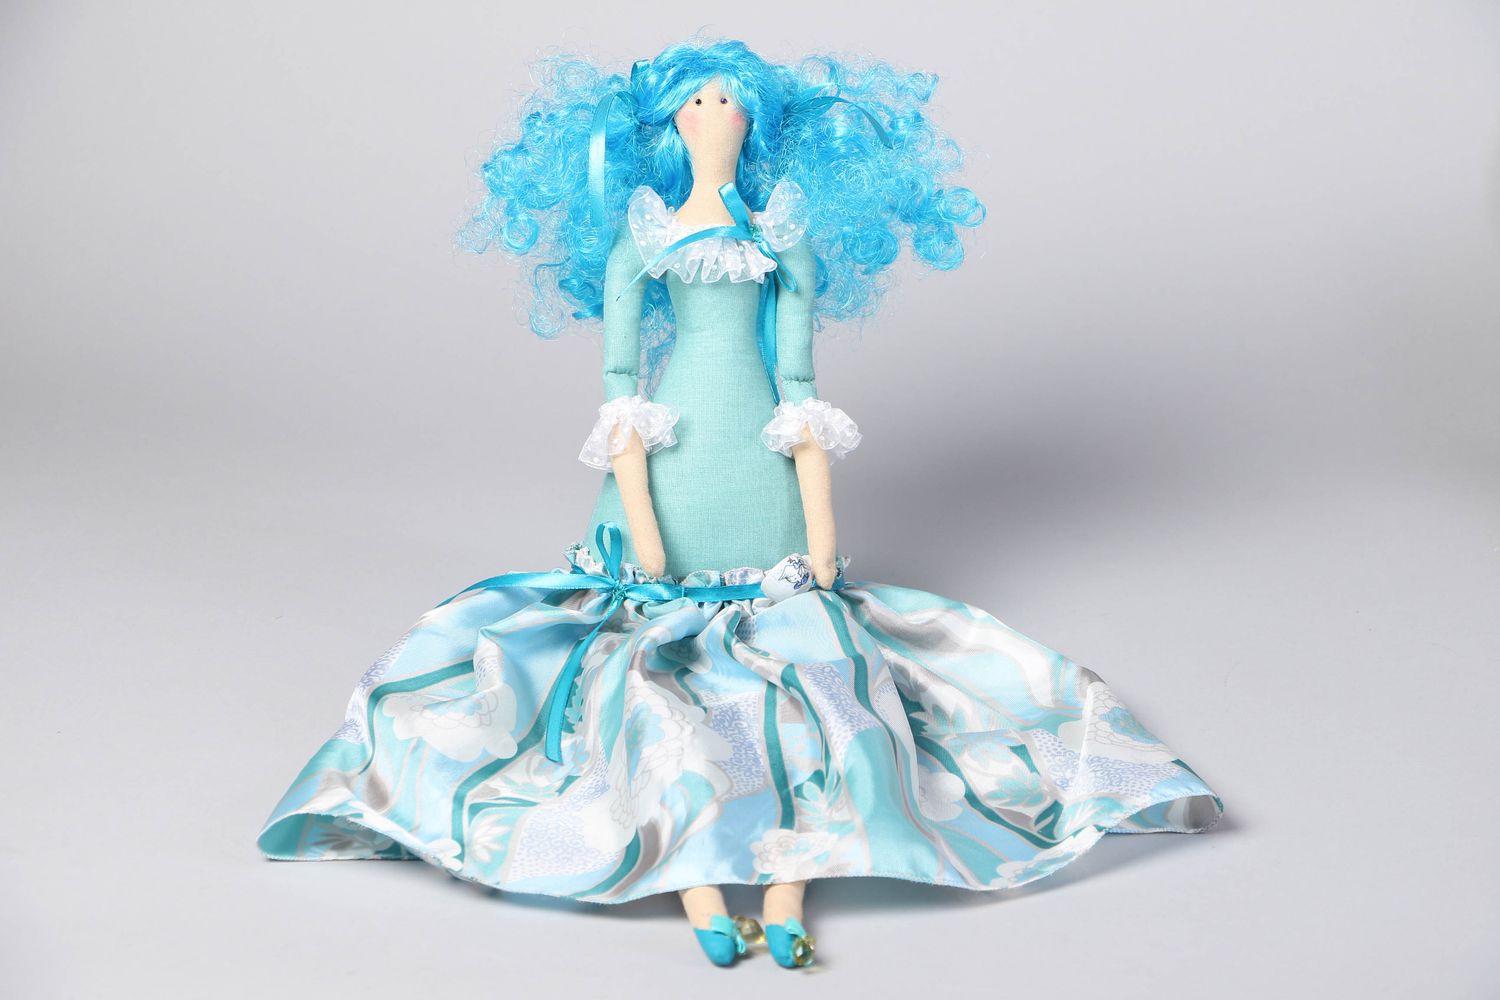 Handmade Puppe mit blauen Haaren foto 1